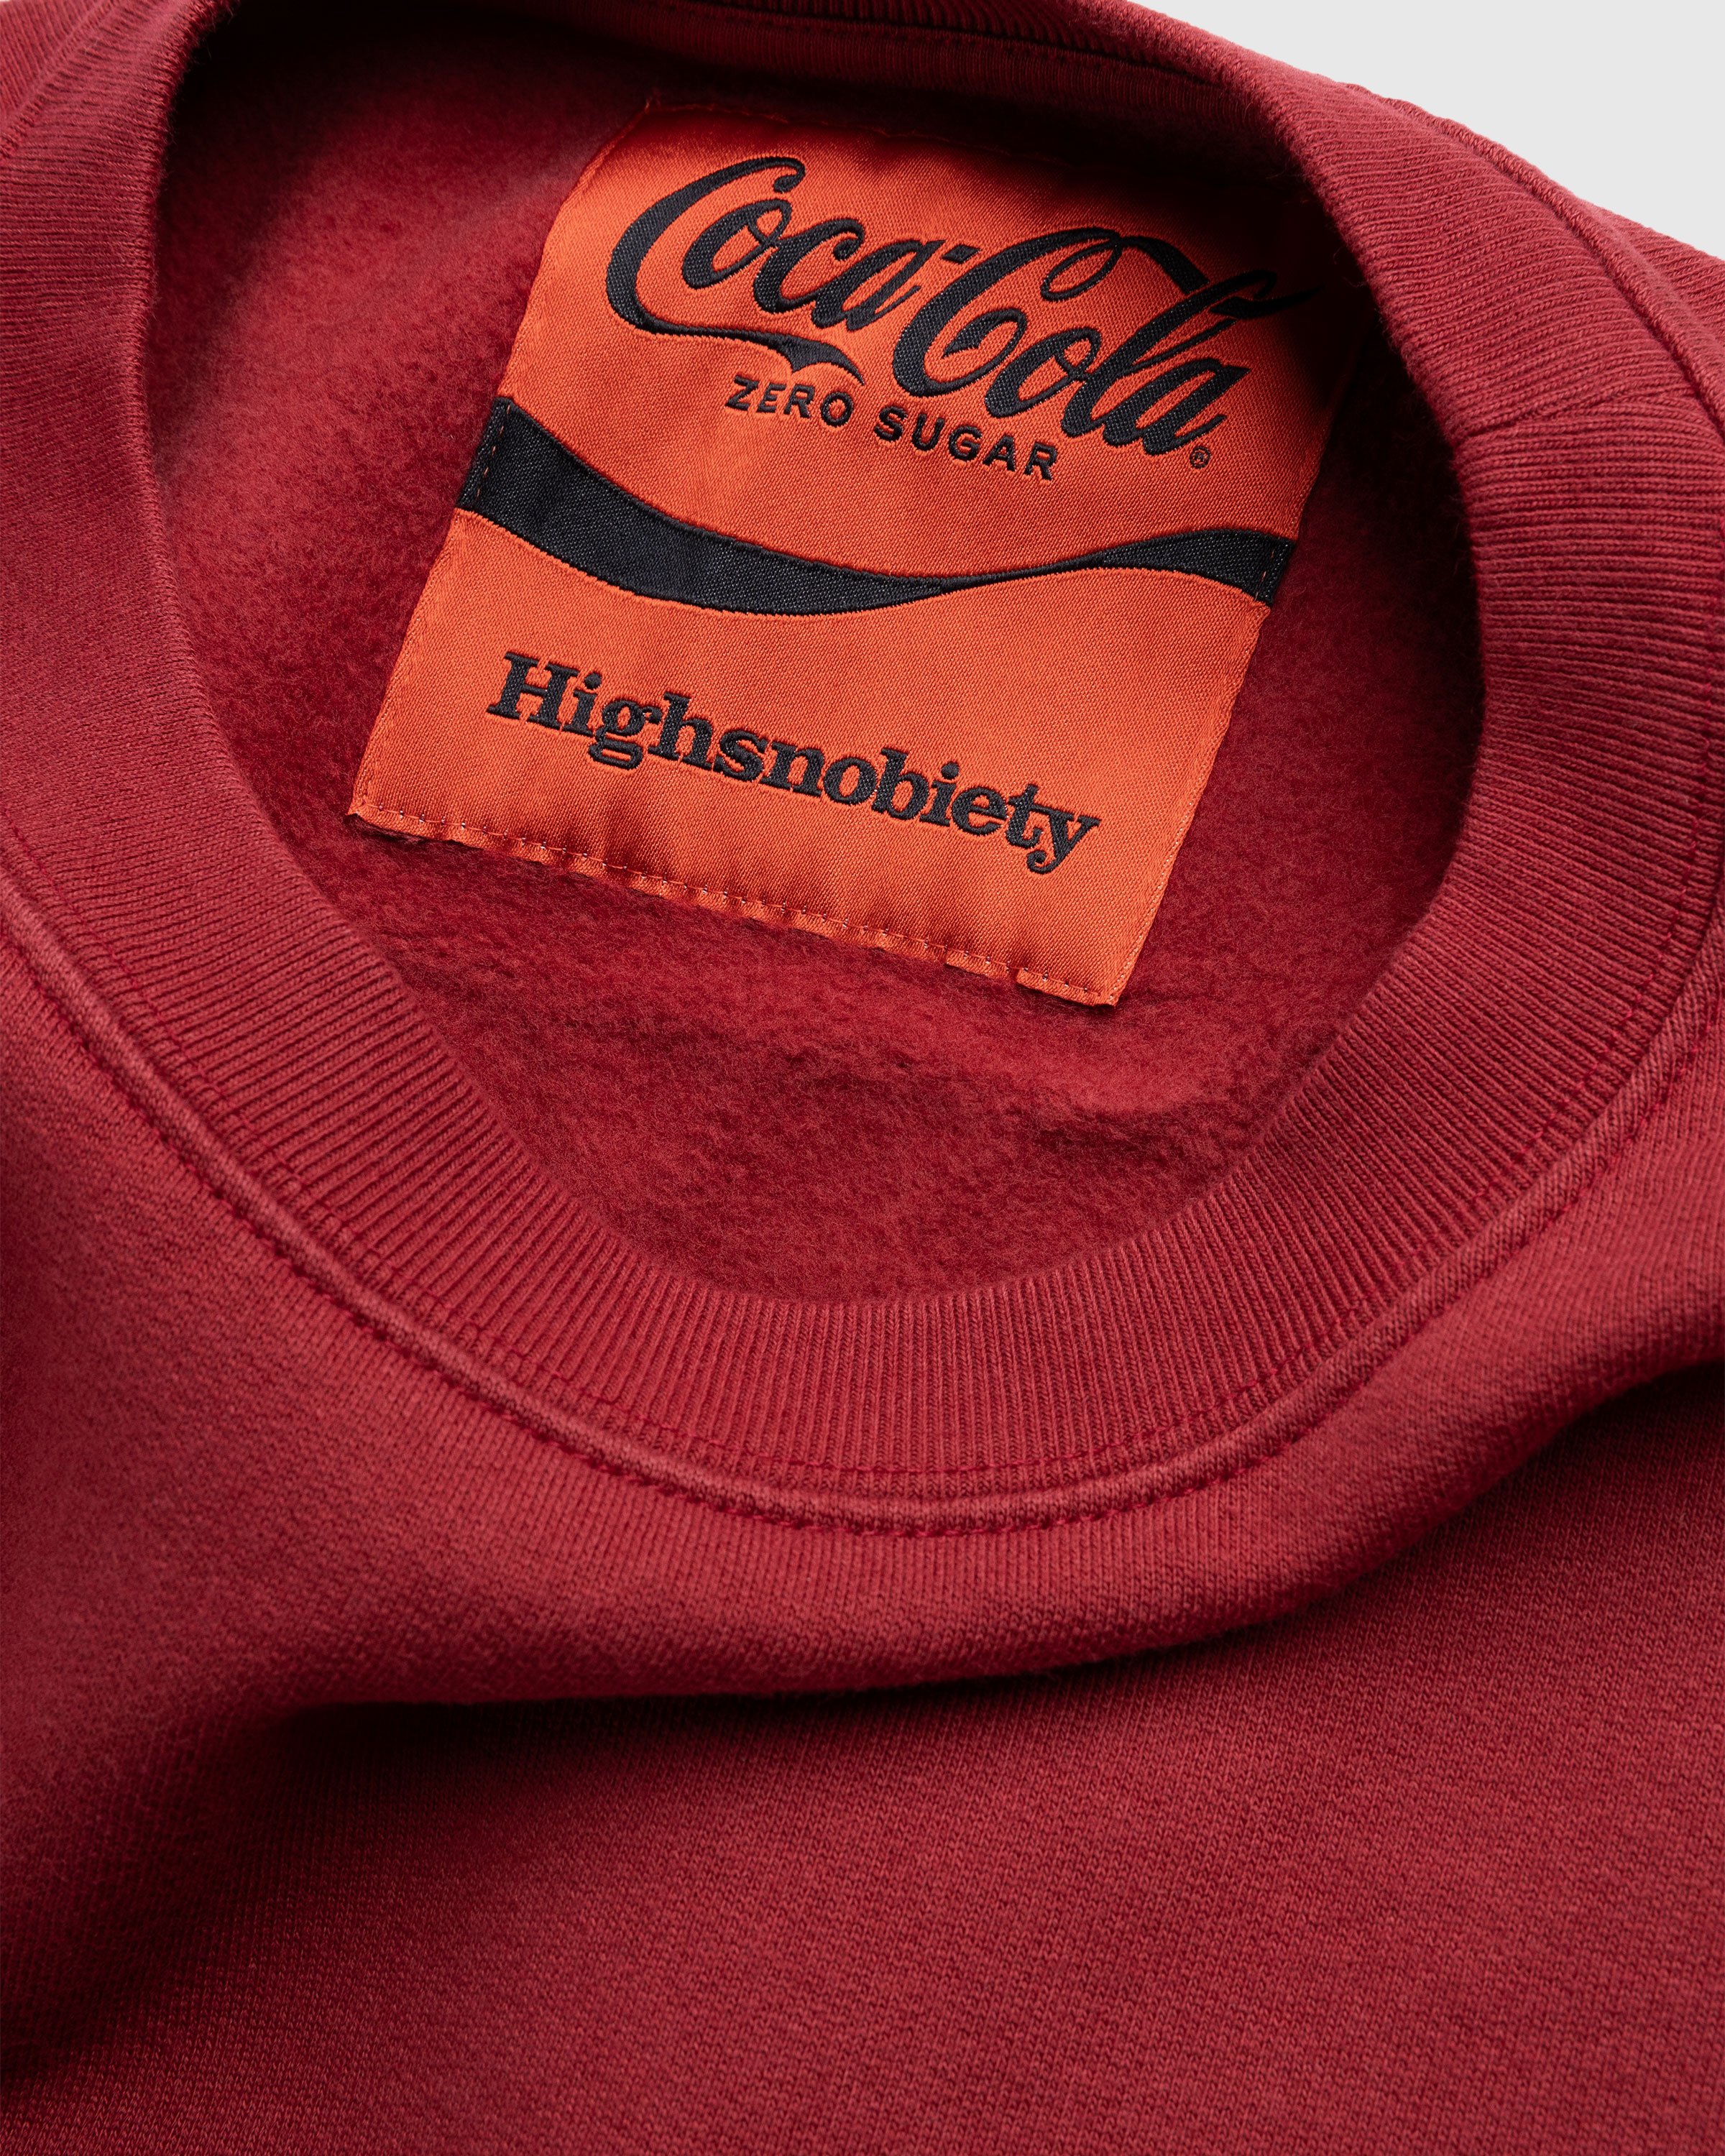 Highsnobiety x Coca-Cola Zero Sugar - Crewneck Burgundy - Clothing - Red - Image 8